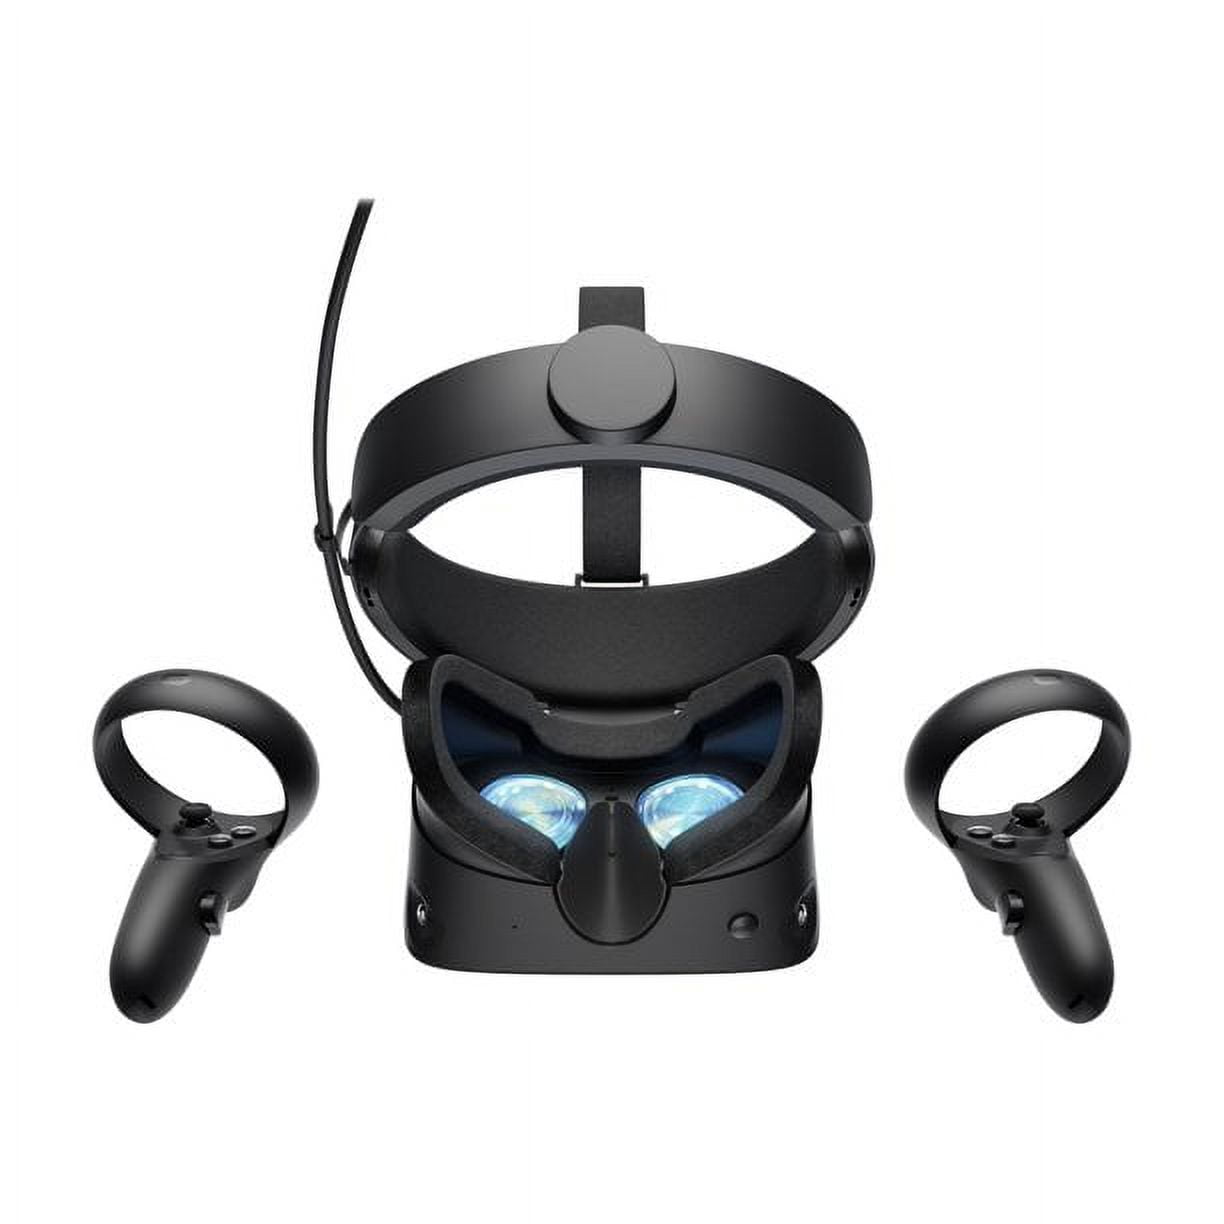 Oculus Rift PC-Powered VR Gaming System (Refurbished) - PC